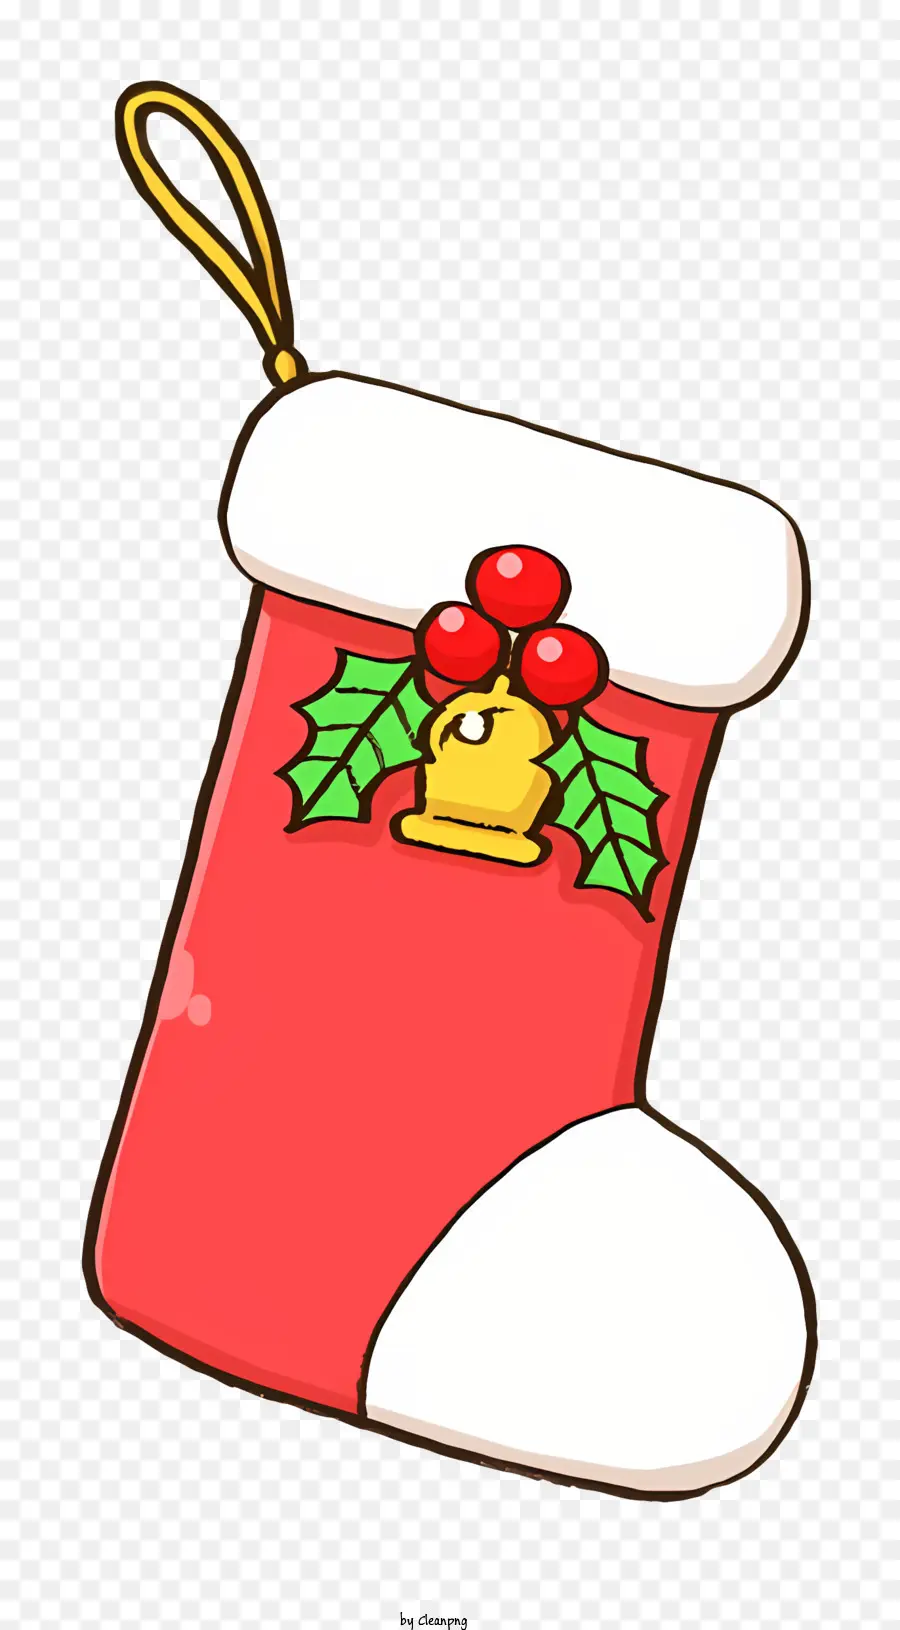 Cartoon Stocking Bow Holly lascia la campana - Calza rossa con prua, agrifoglio, campana, filo; 
Natale